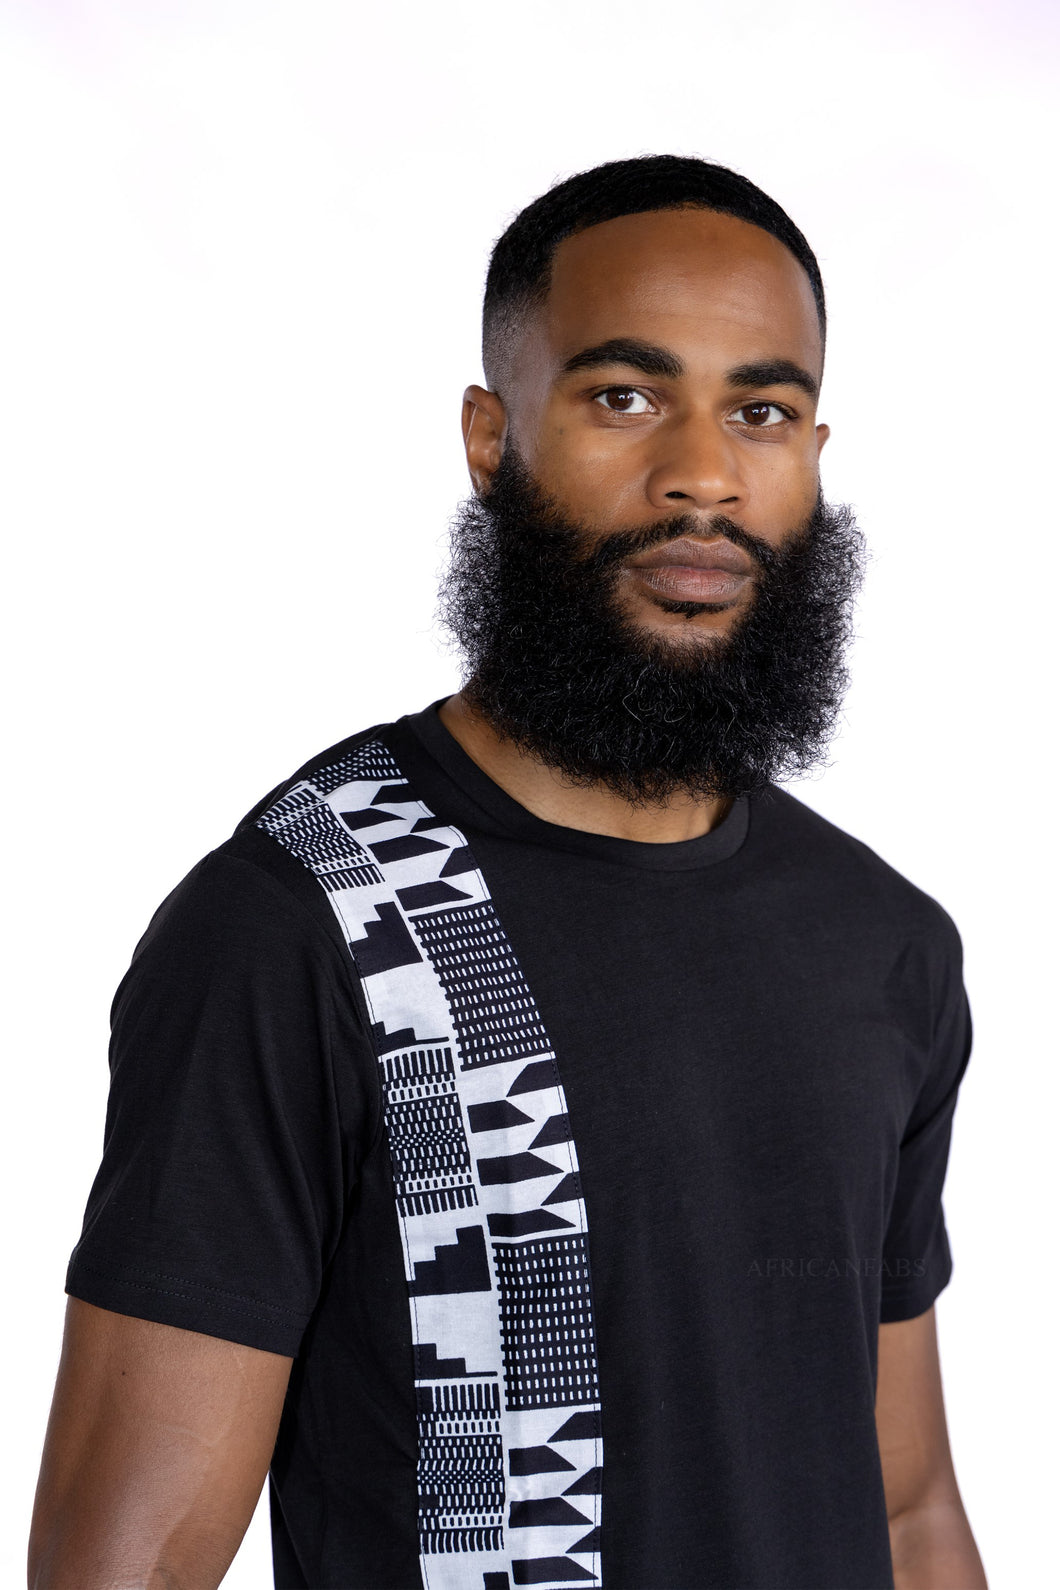 T-shirt met Afrikaanse printdetails - Zwart/witte kente band